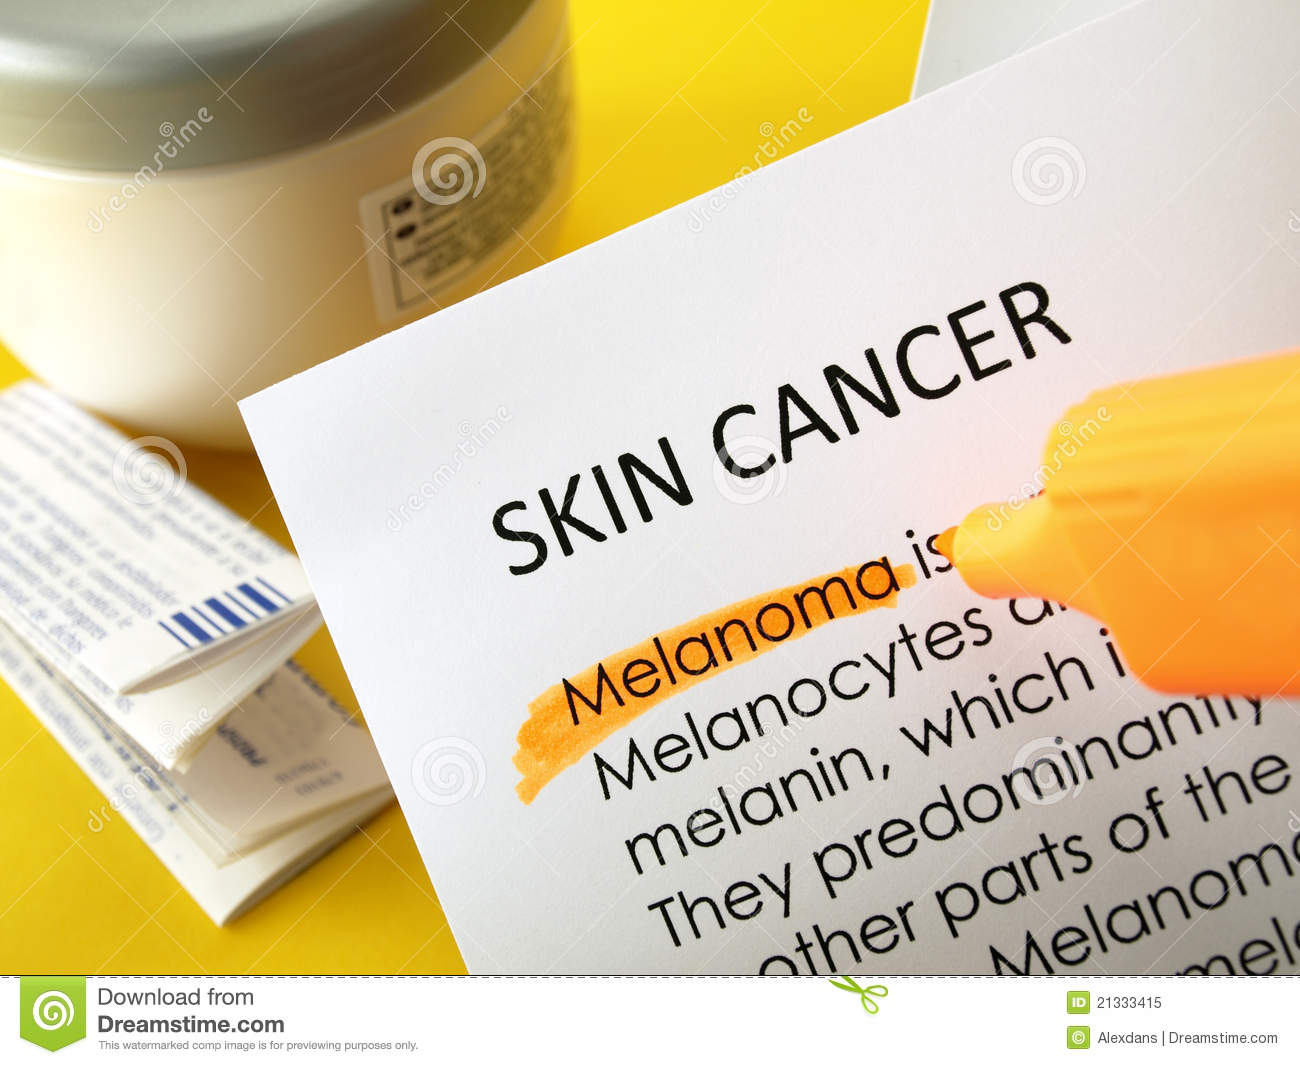 Skin Cancer Treatments Royalty Free Stock Photo   Image  21333415